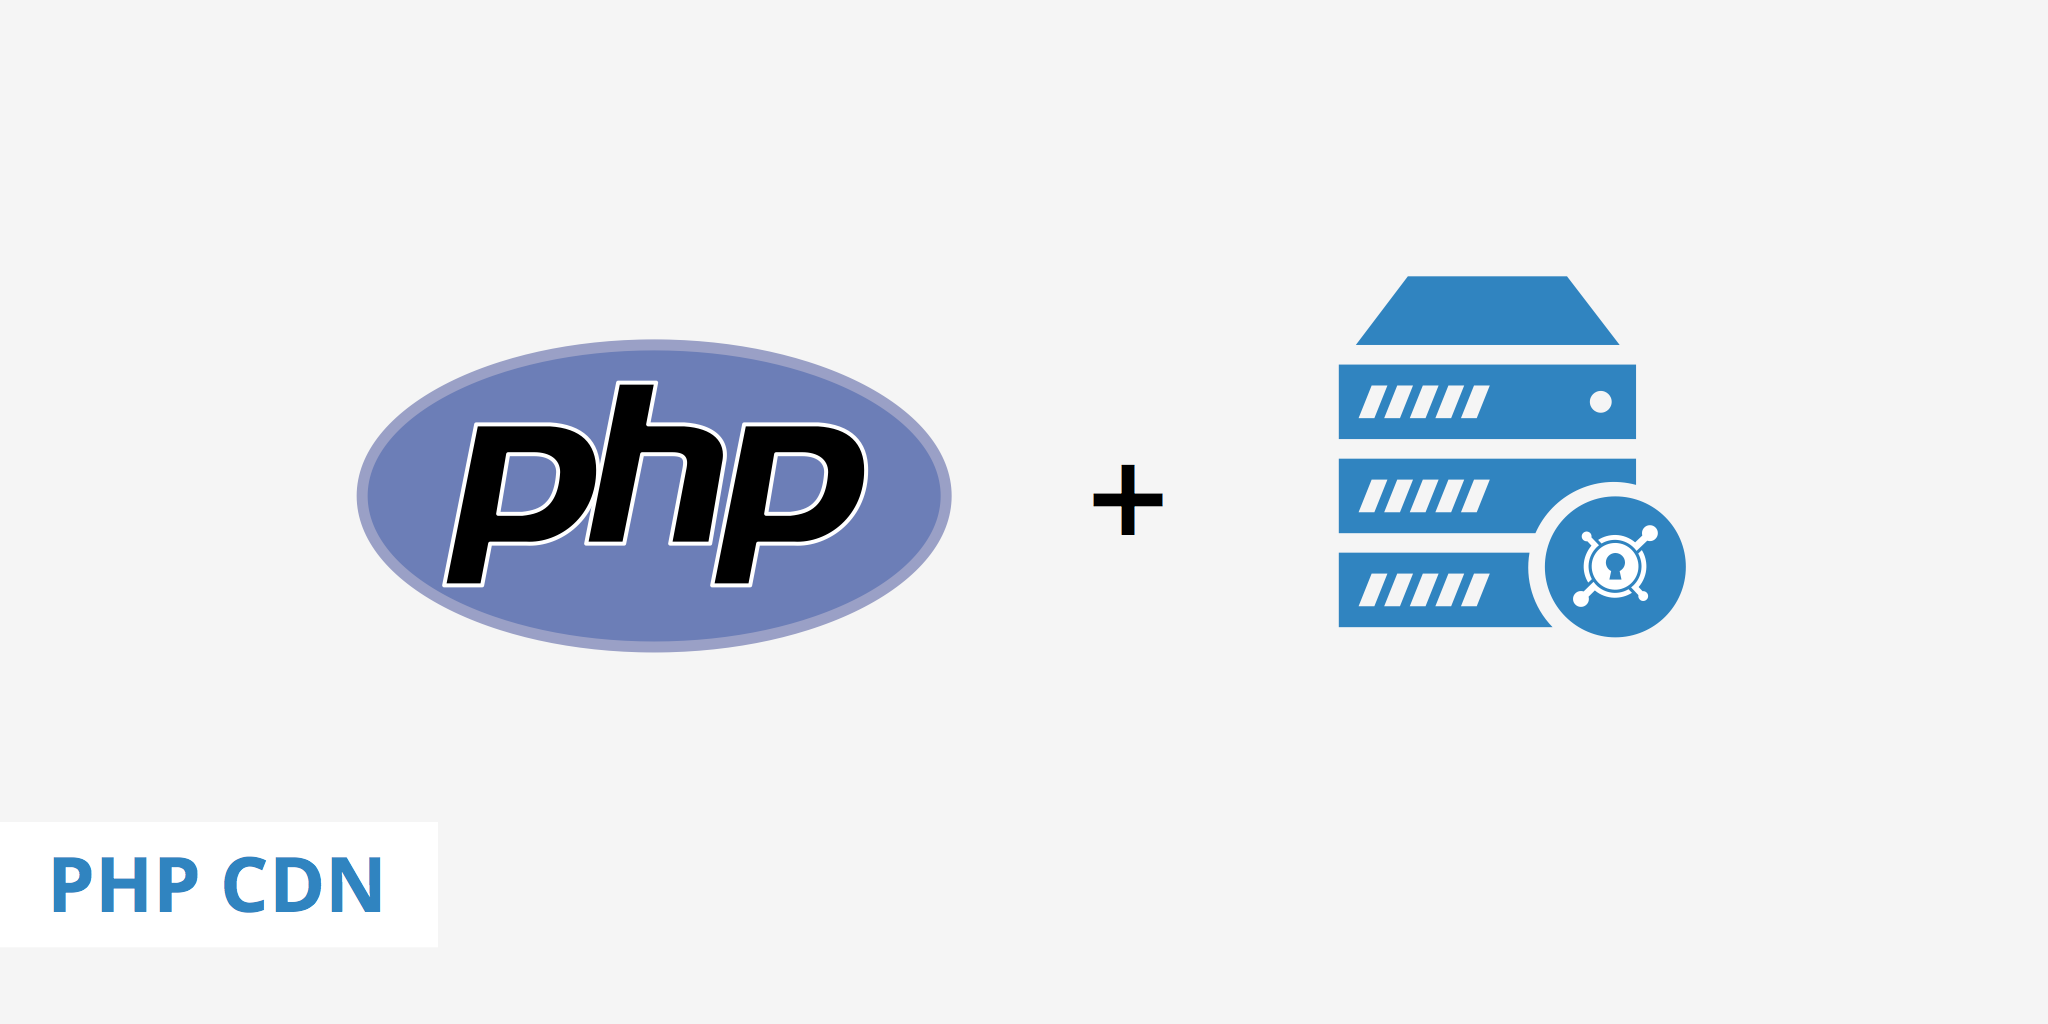 Using a PHP CDN Setup